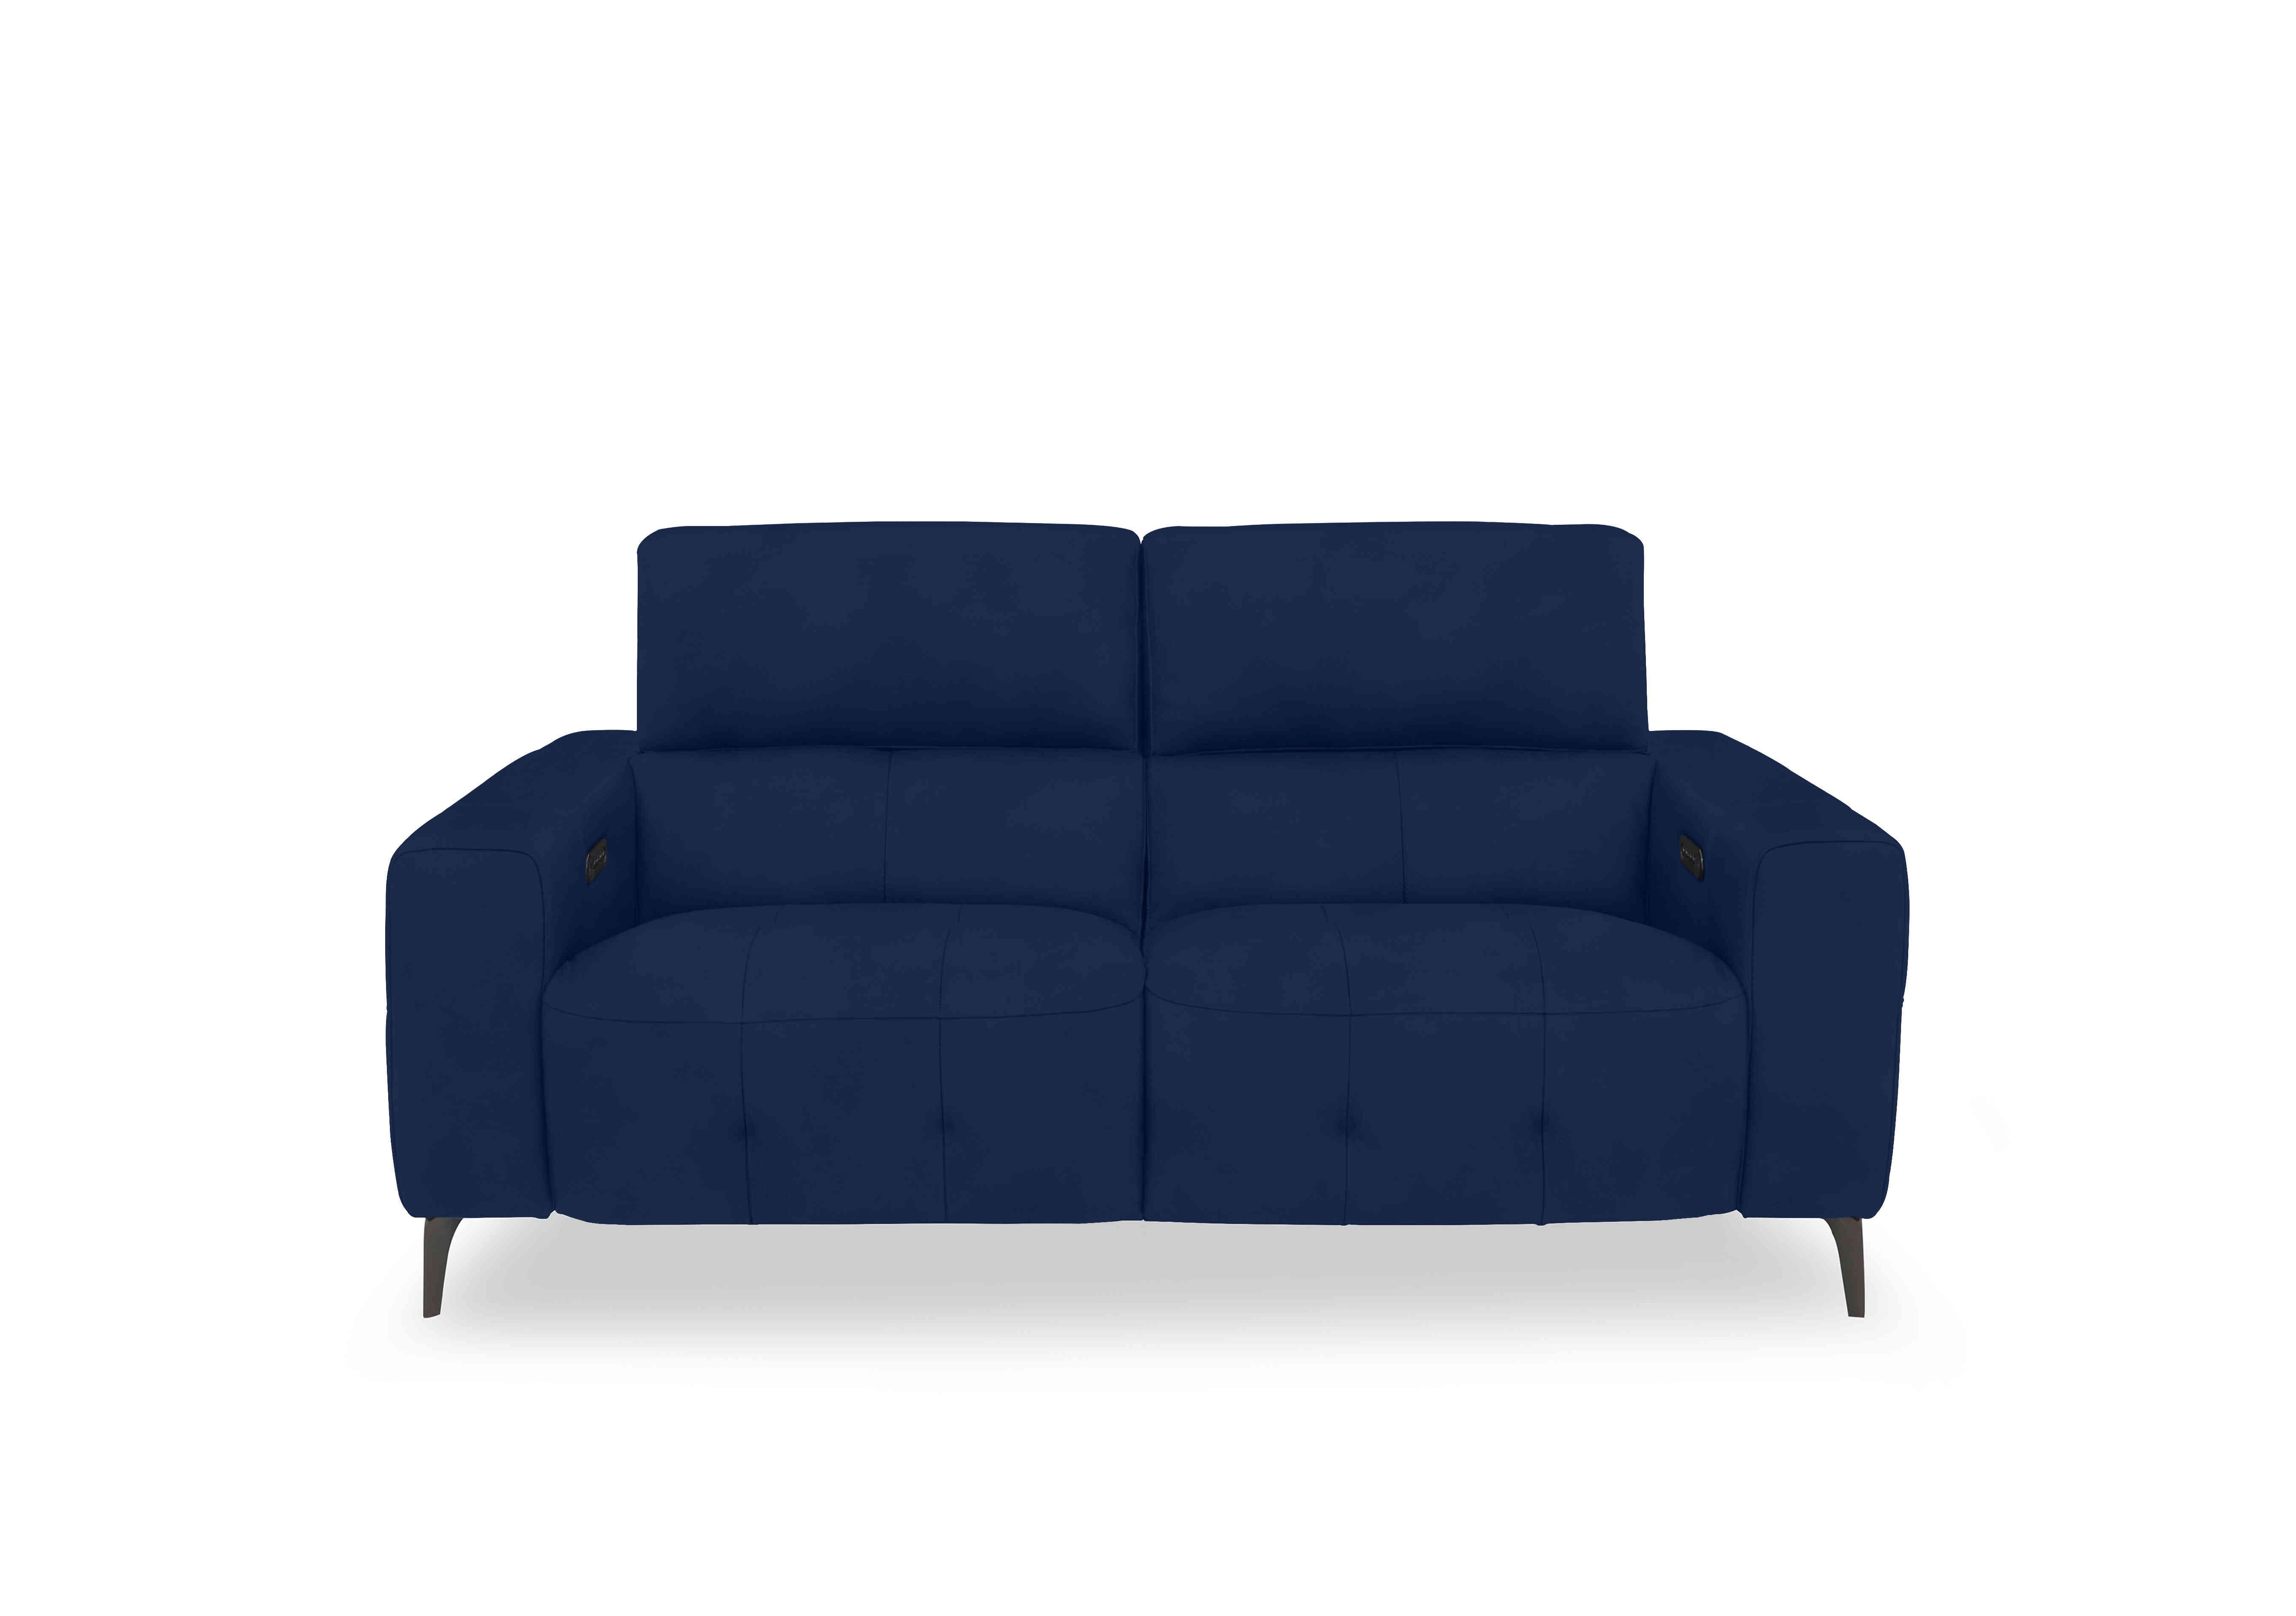 New York 2 Seater Fabric Sofa in Fab-Meg-R28 Navy on Furniture Village